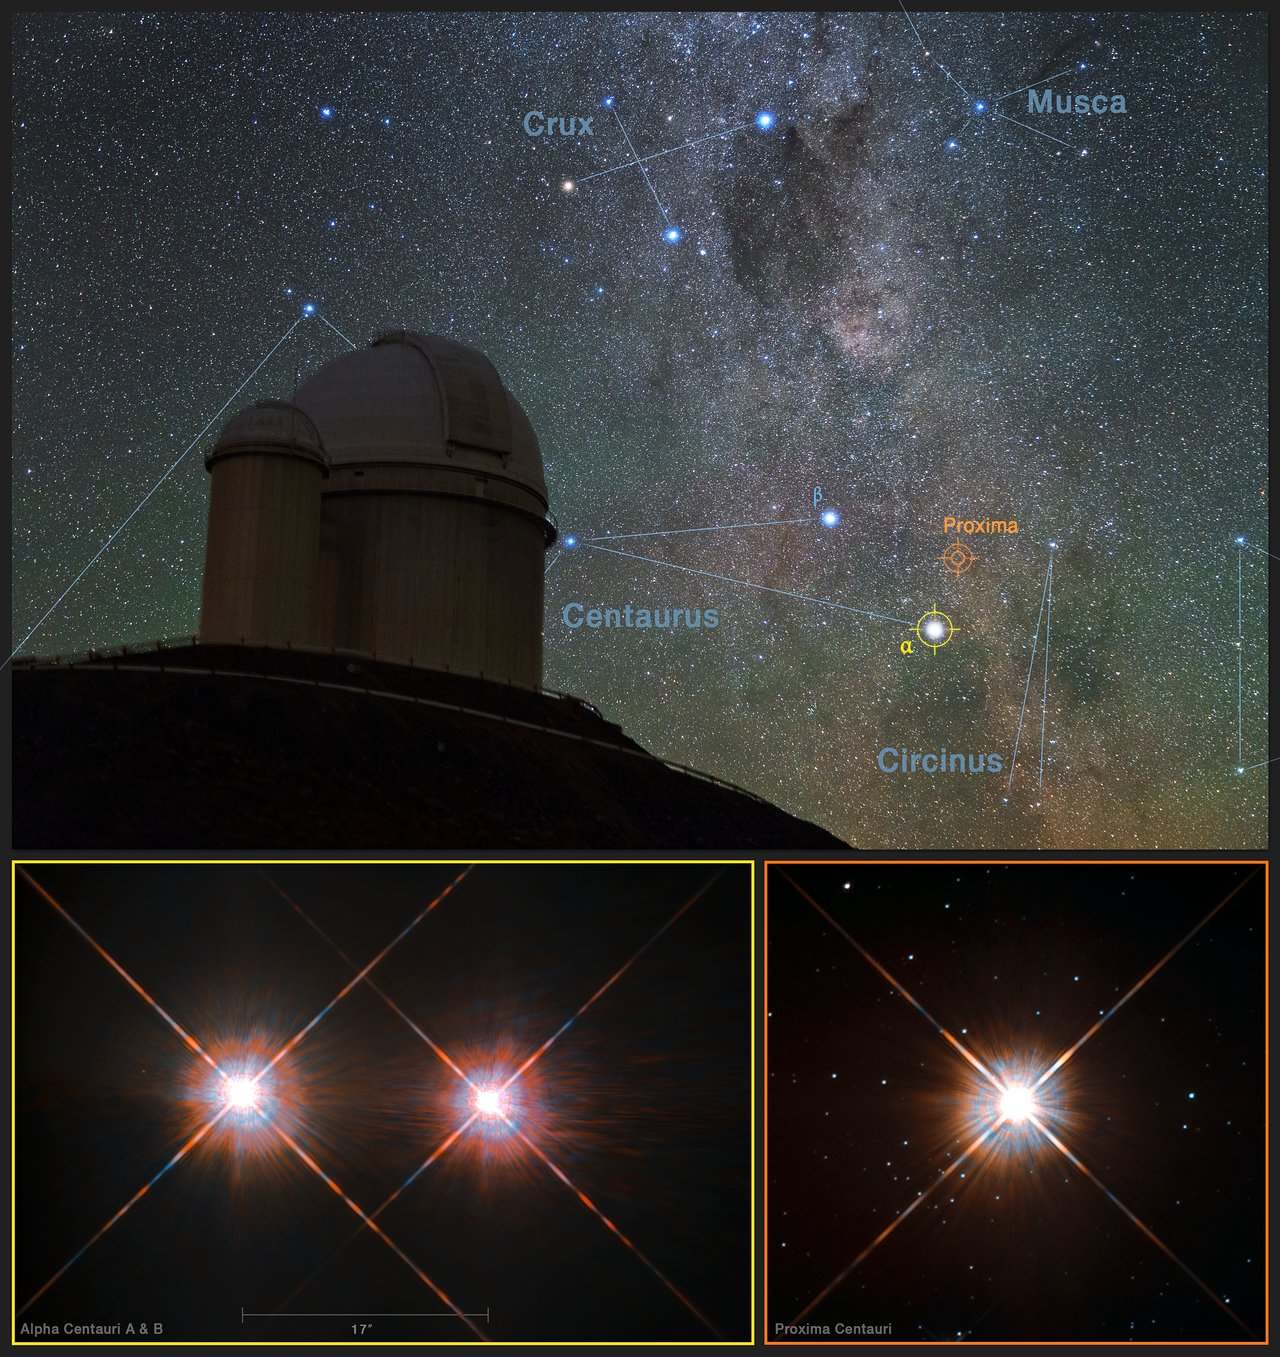 ALMA Records Giant Stellar Flare on Proxima Centauri, Astronomy